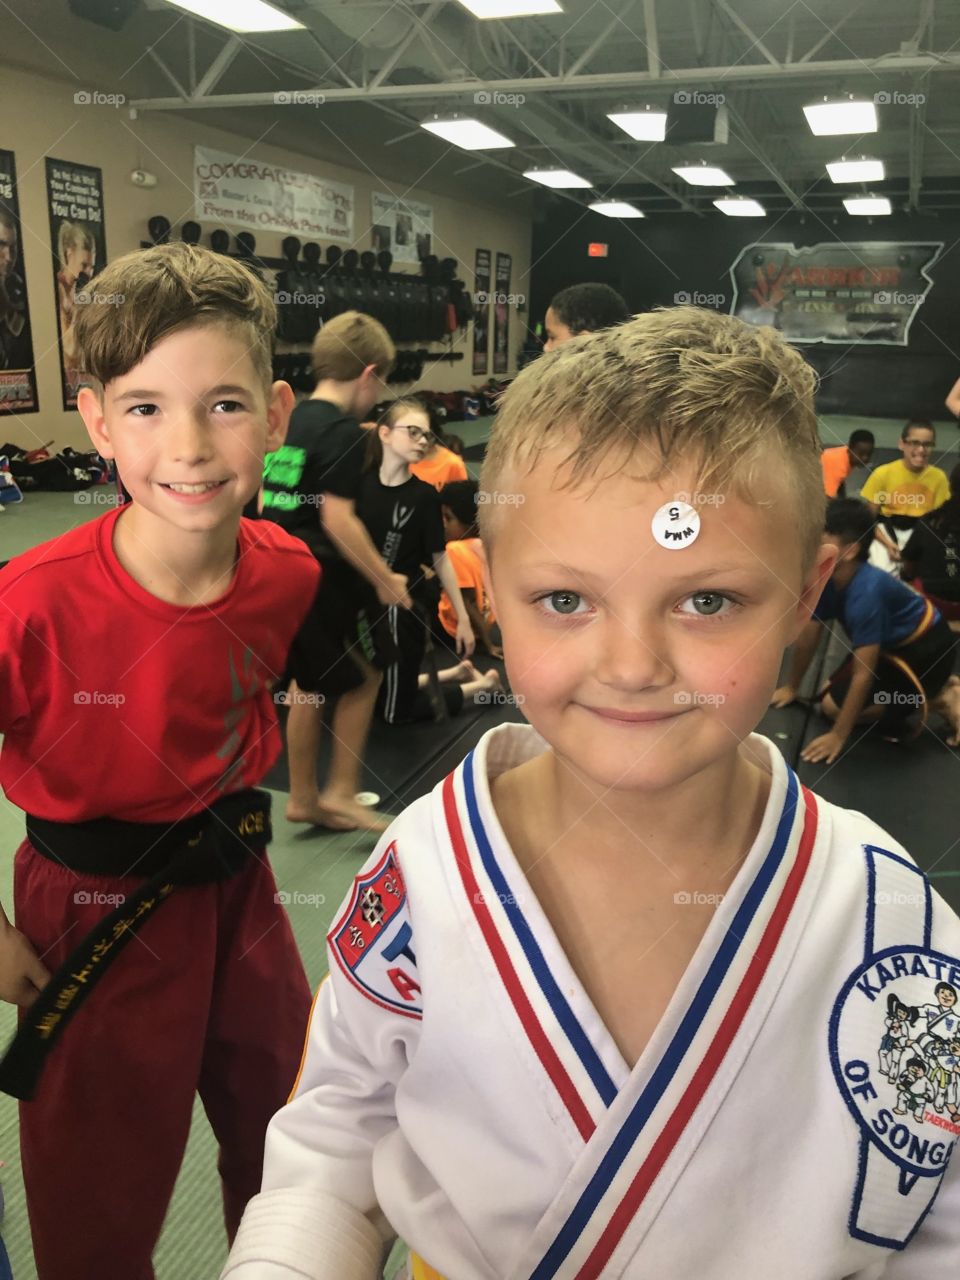 Making new friends at karate